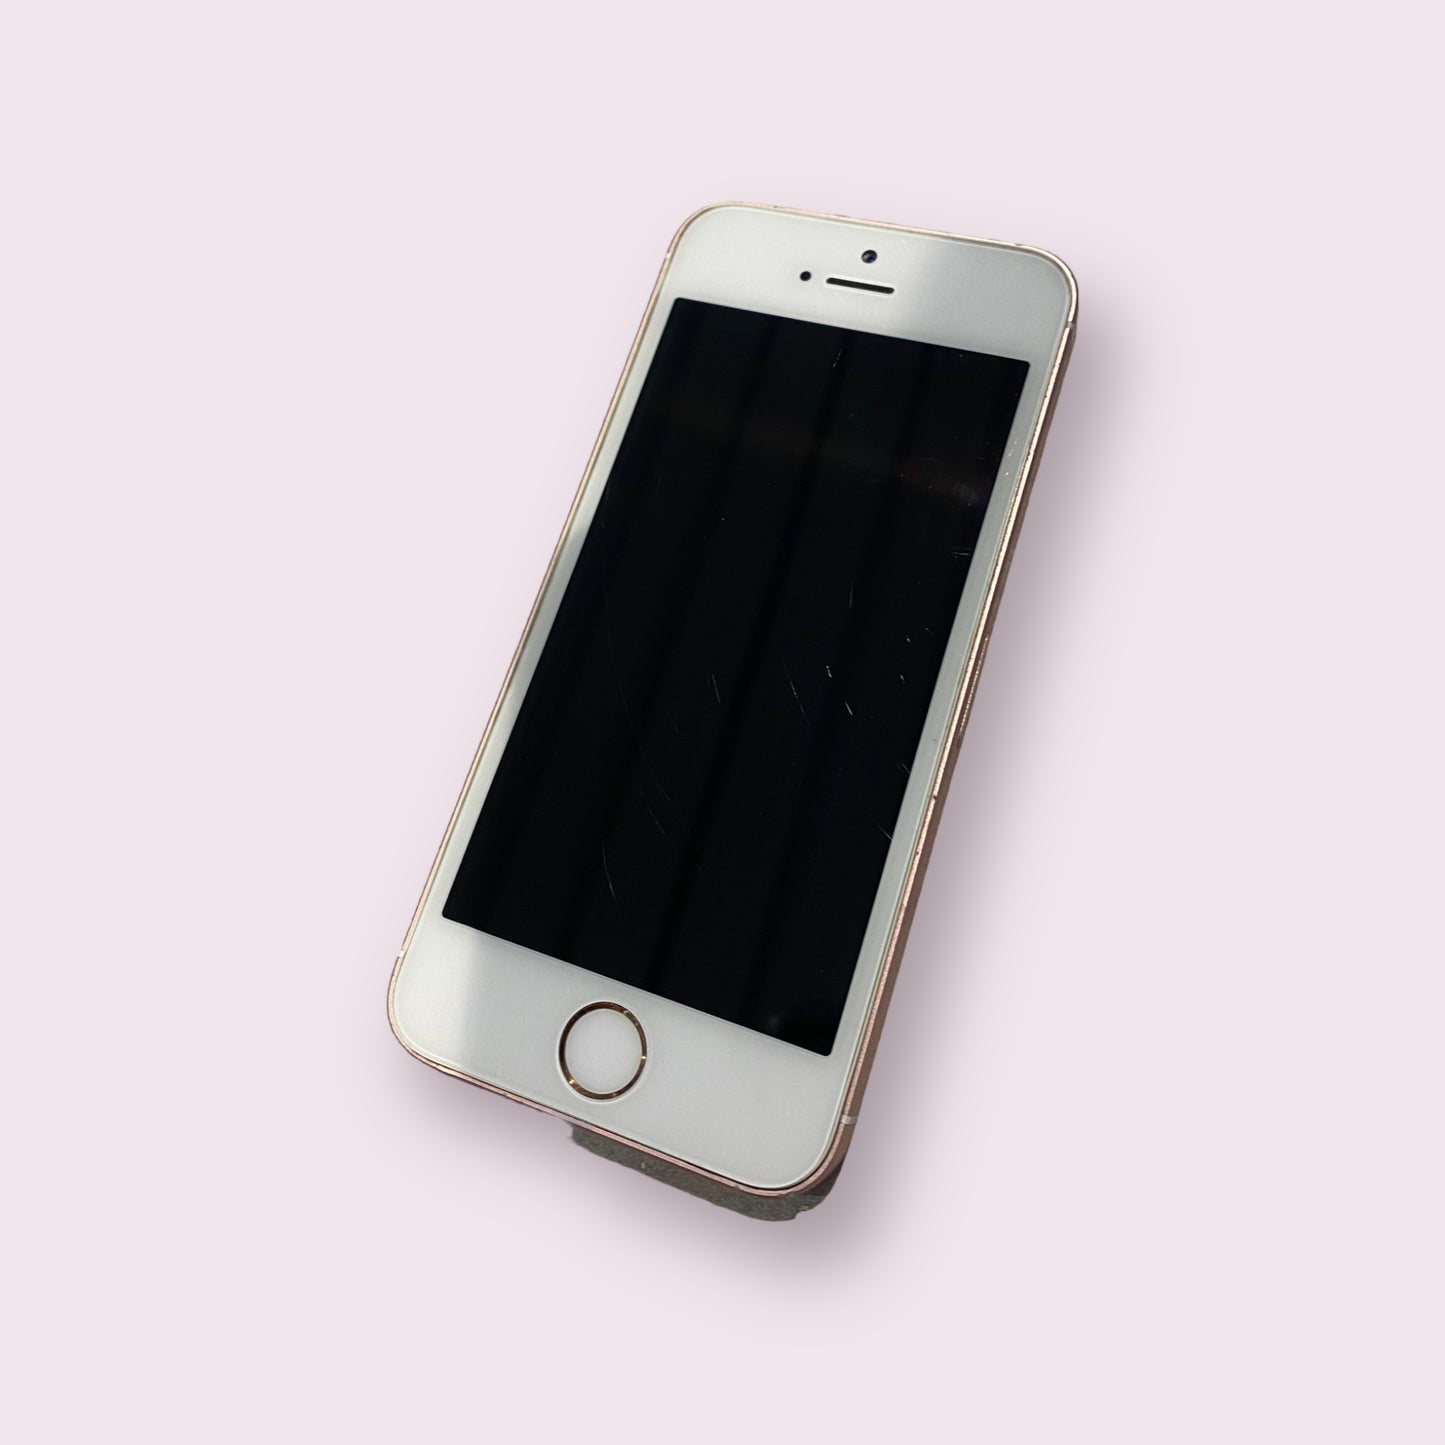 Apple iPhone SE 32gb  Rose Gold- Unlocked - Grade B